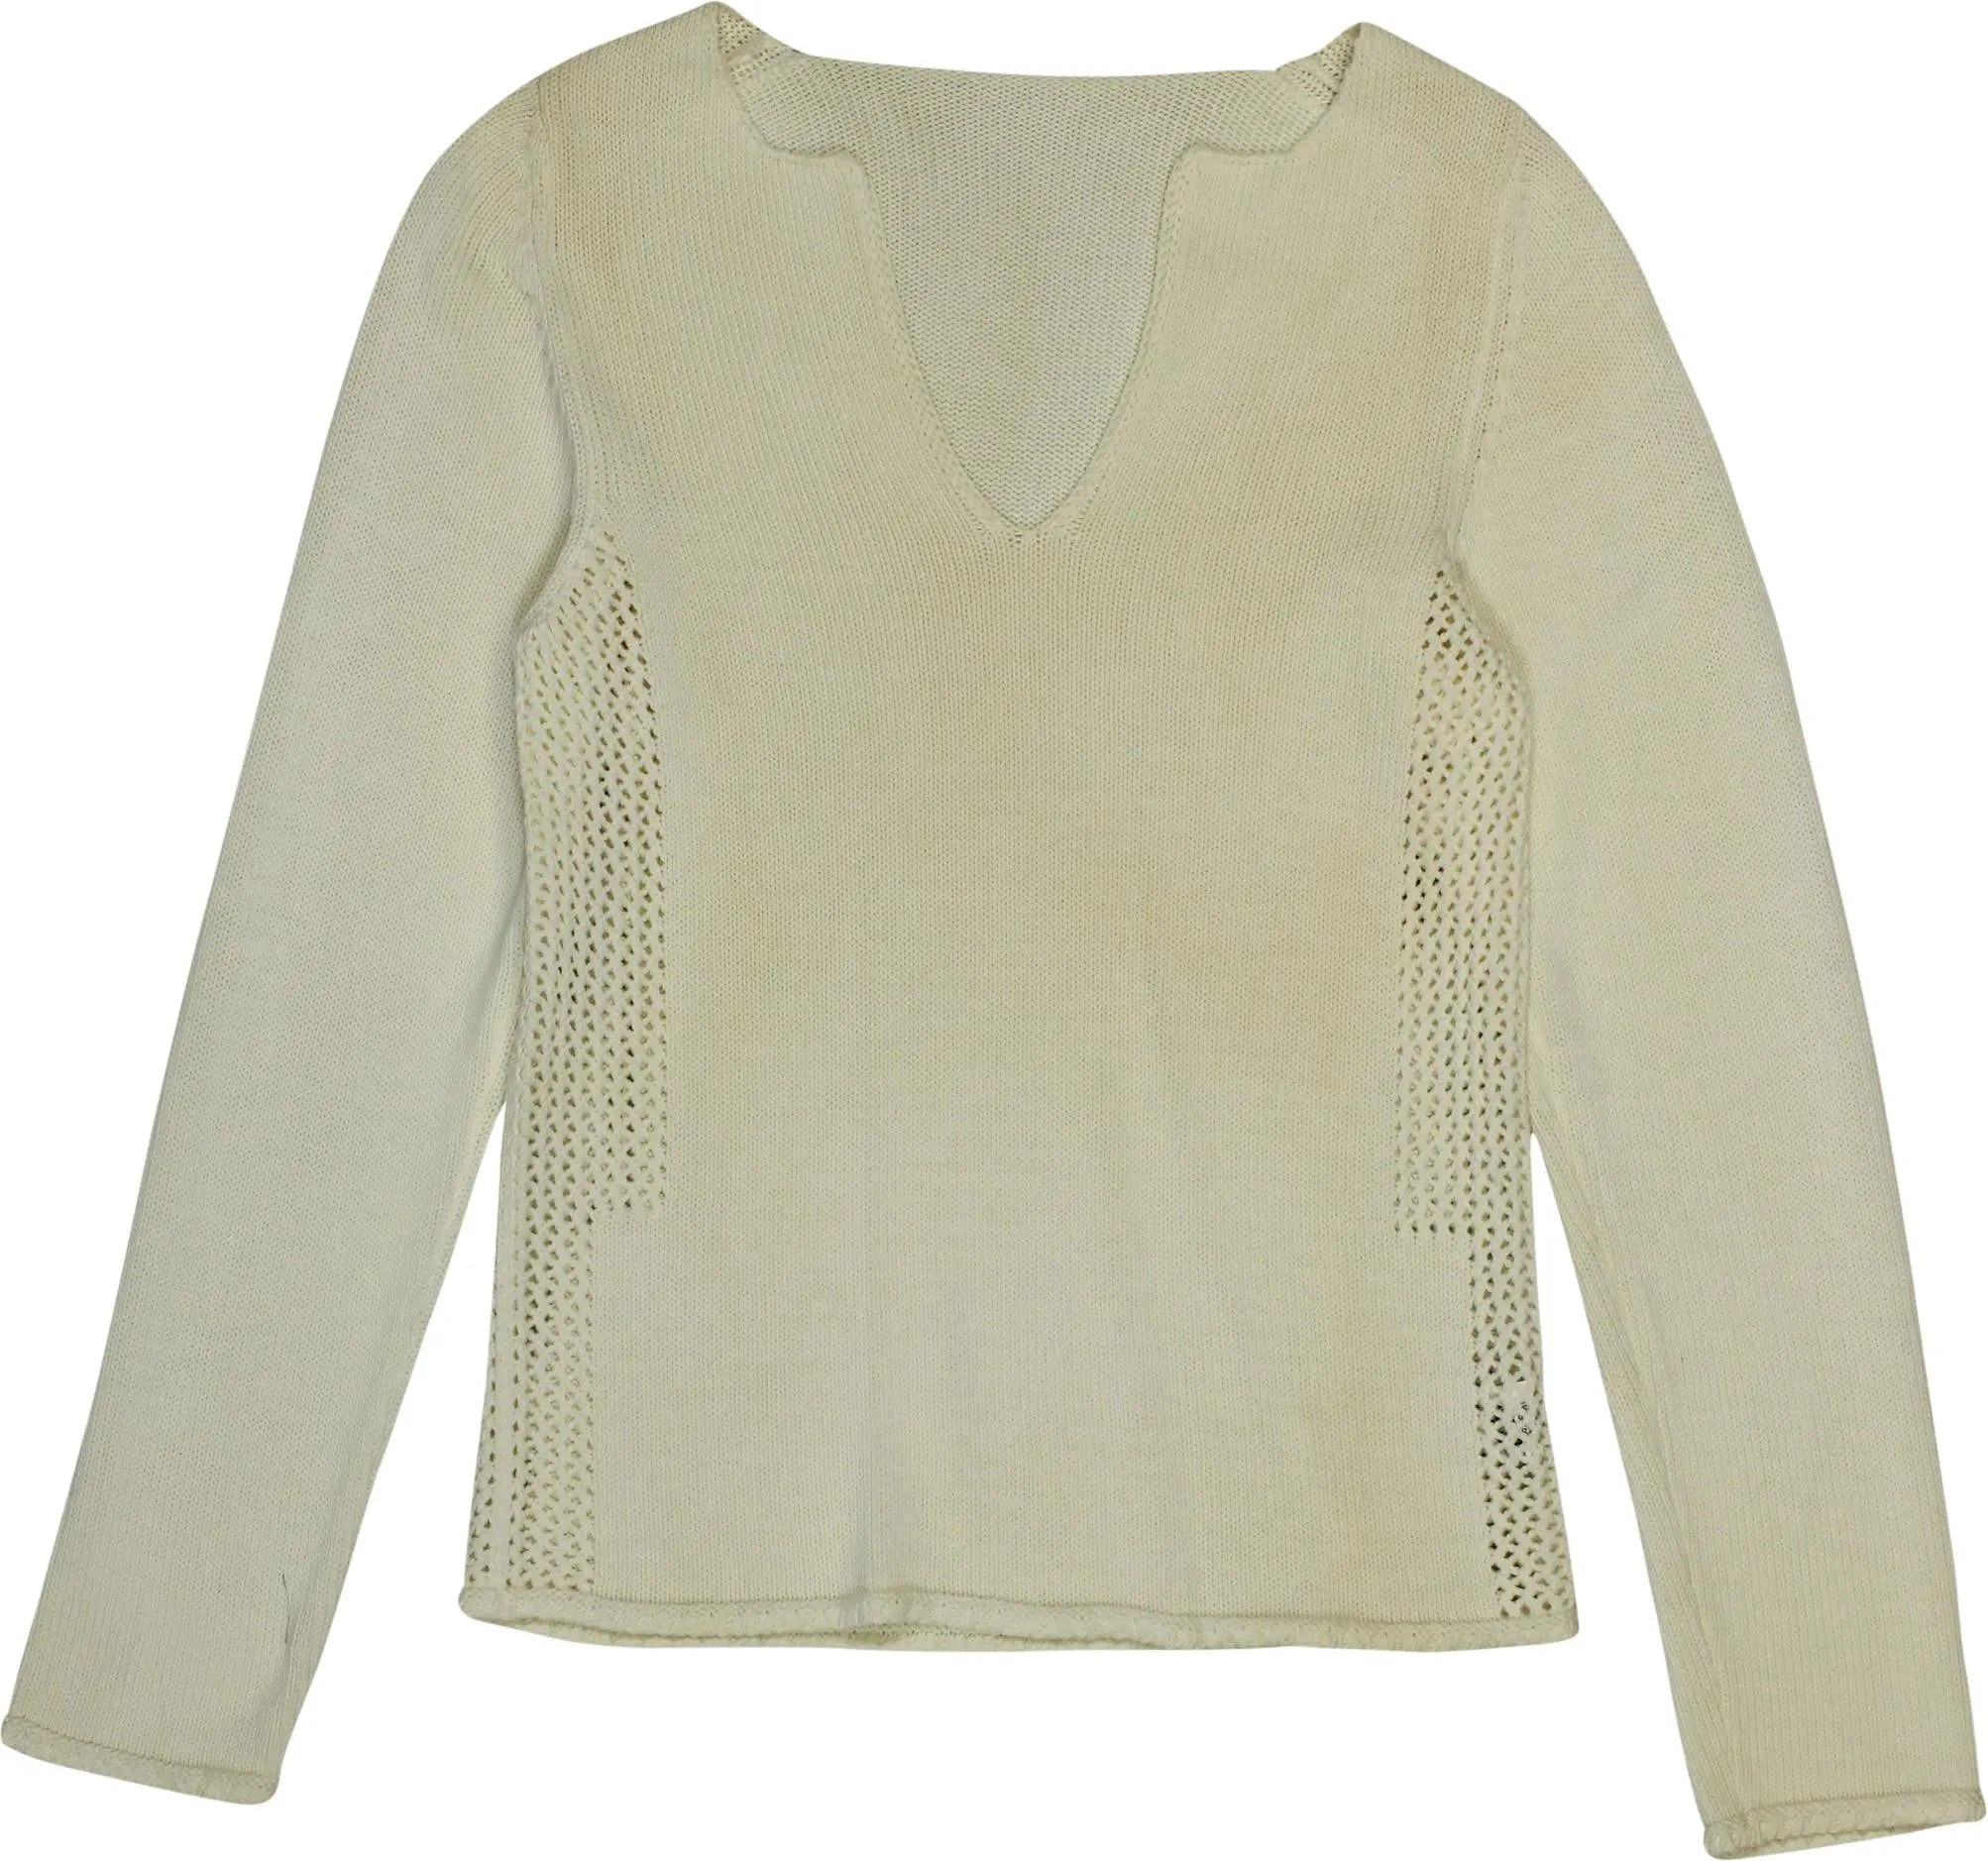 Alpha - Cream Knitted V-neck Jumper- ThriftTale.com - Vintage and second handclothing